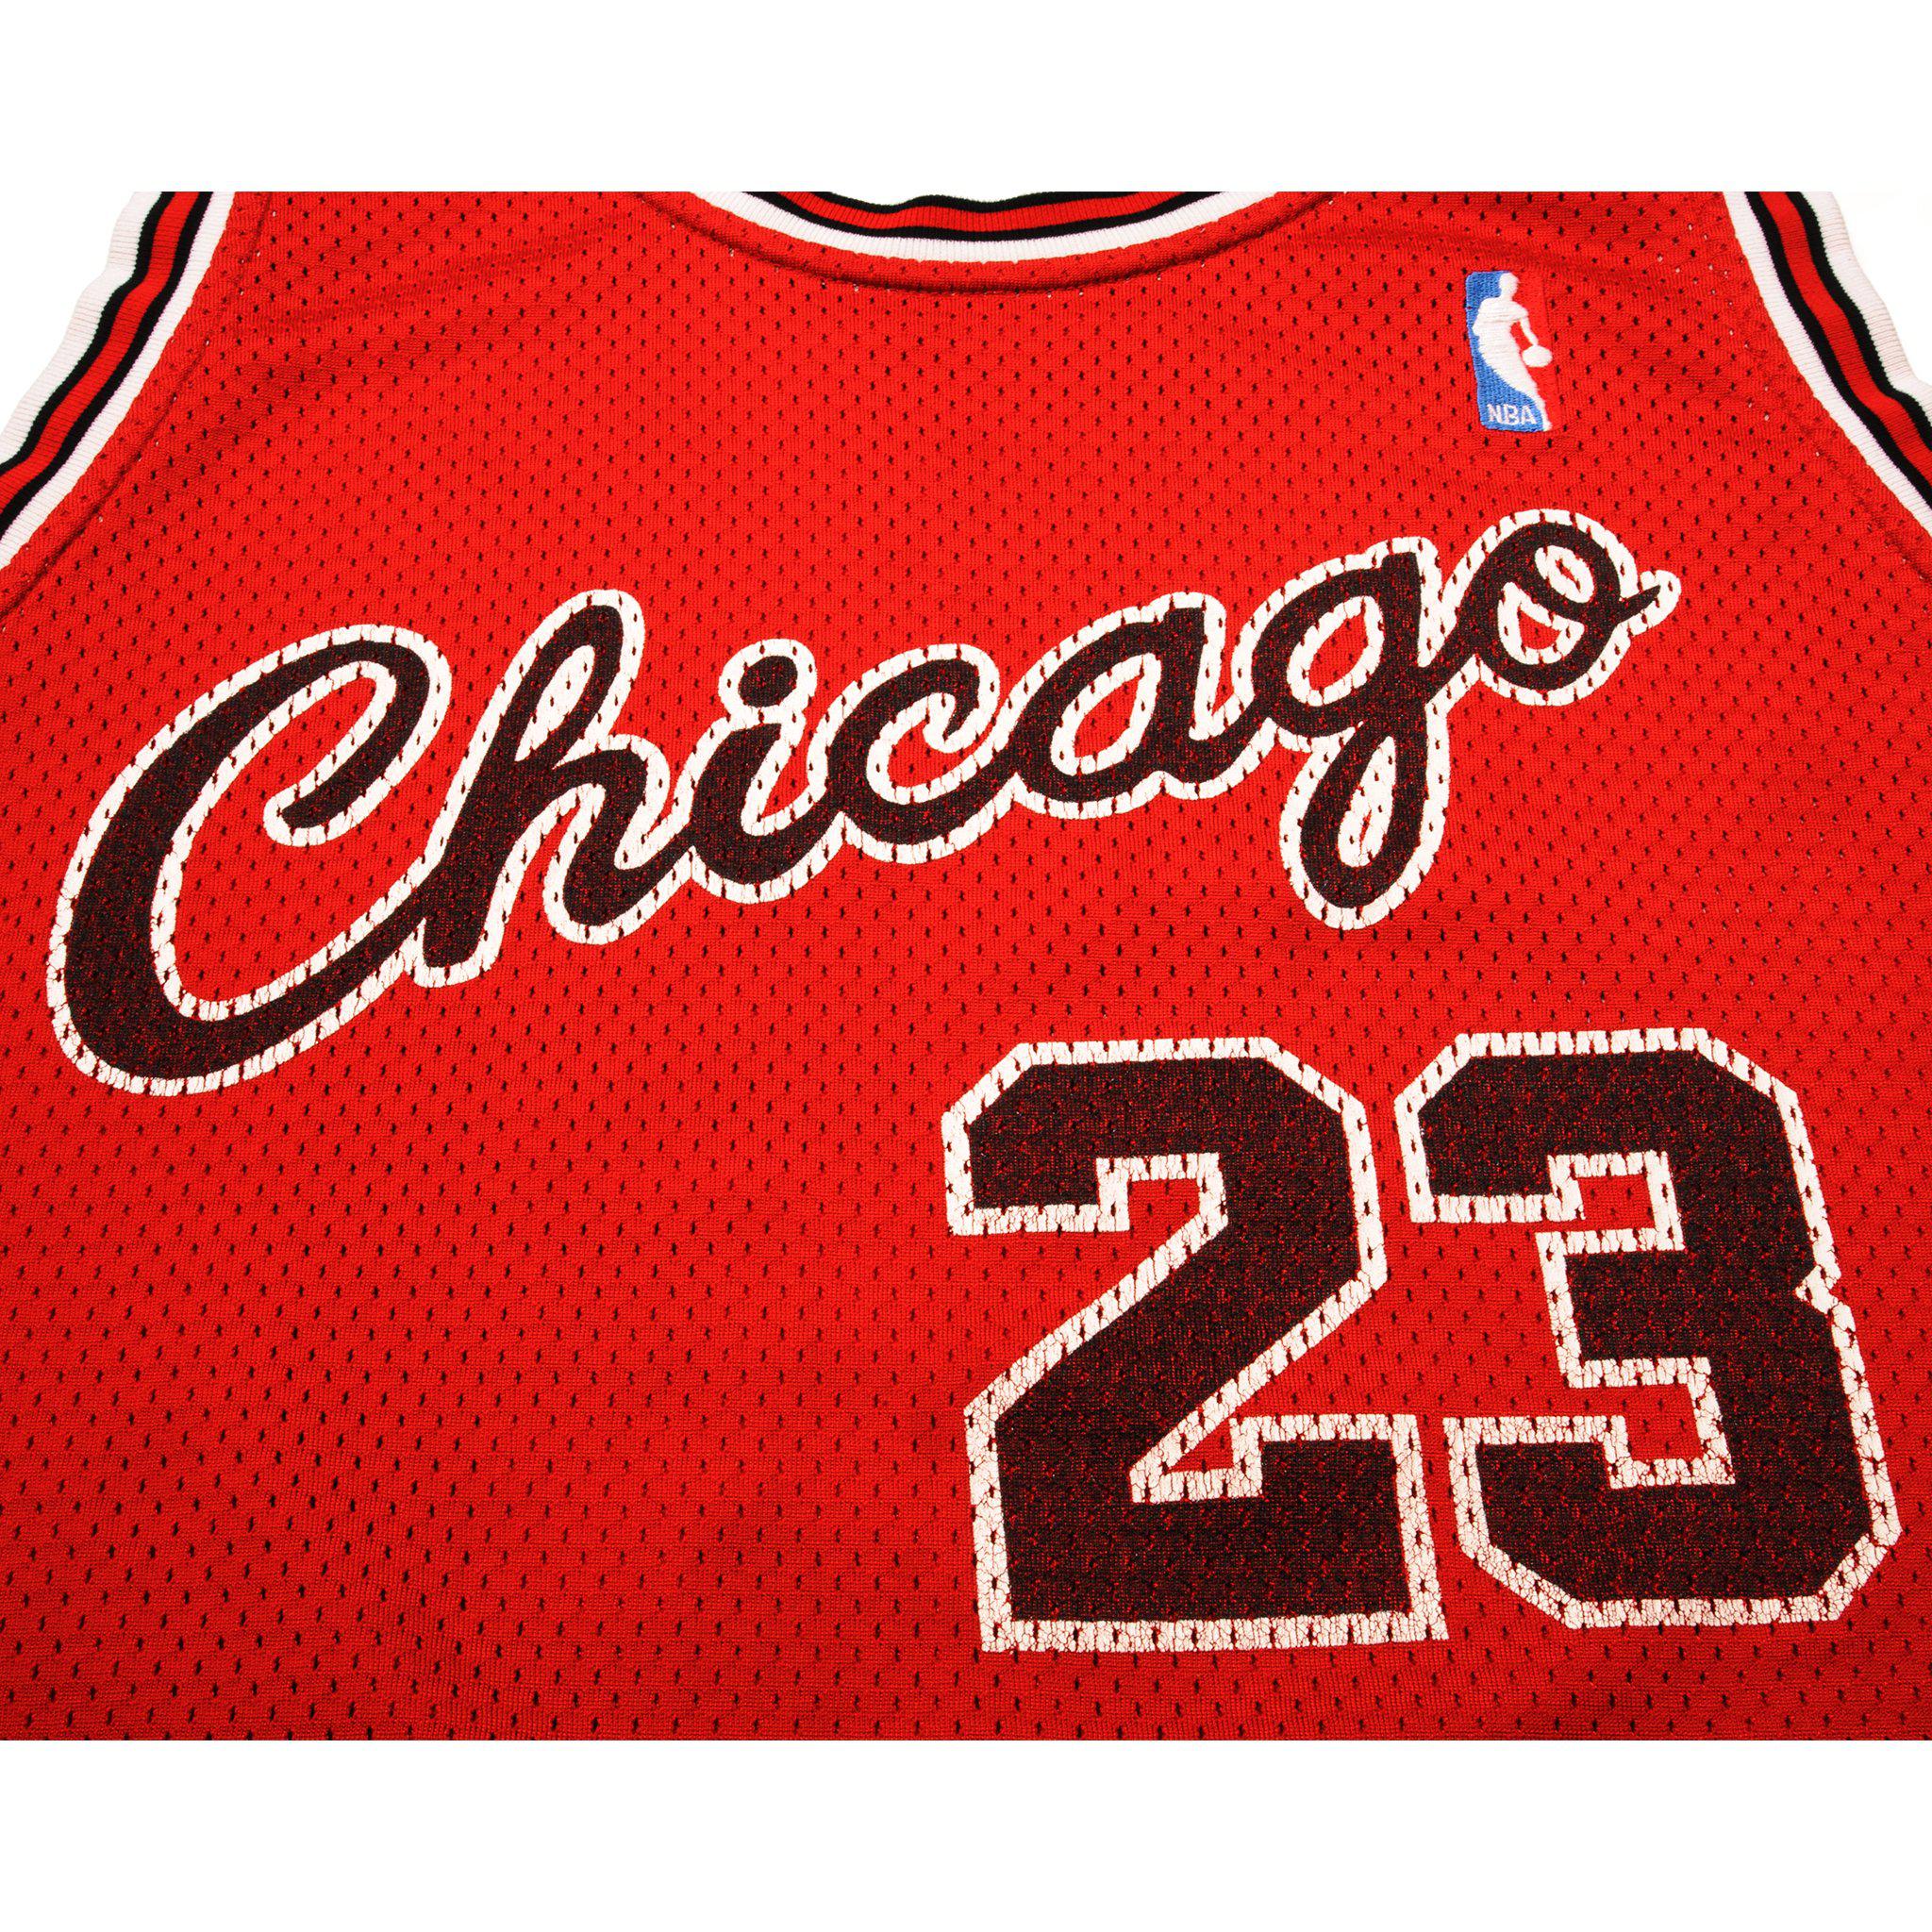 Vintage Nike NBA Chicago Bulls Michael Jordan Basketball Jersey